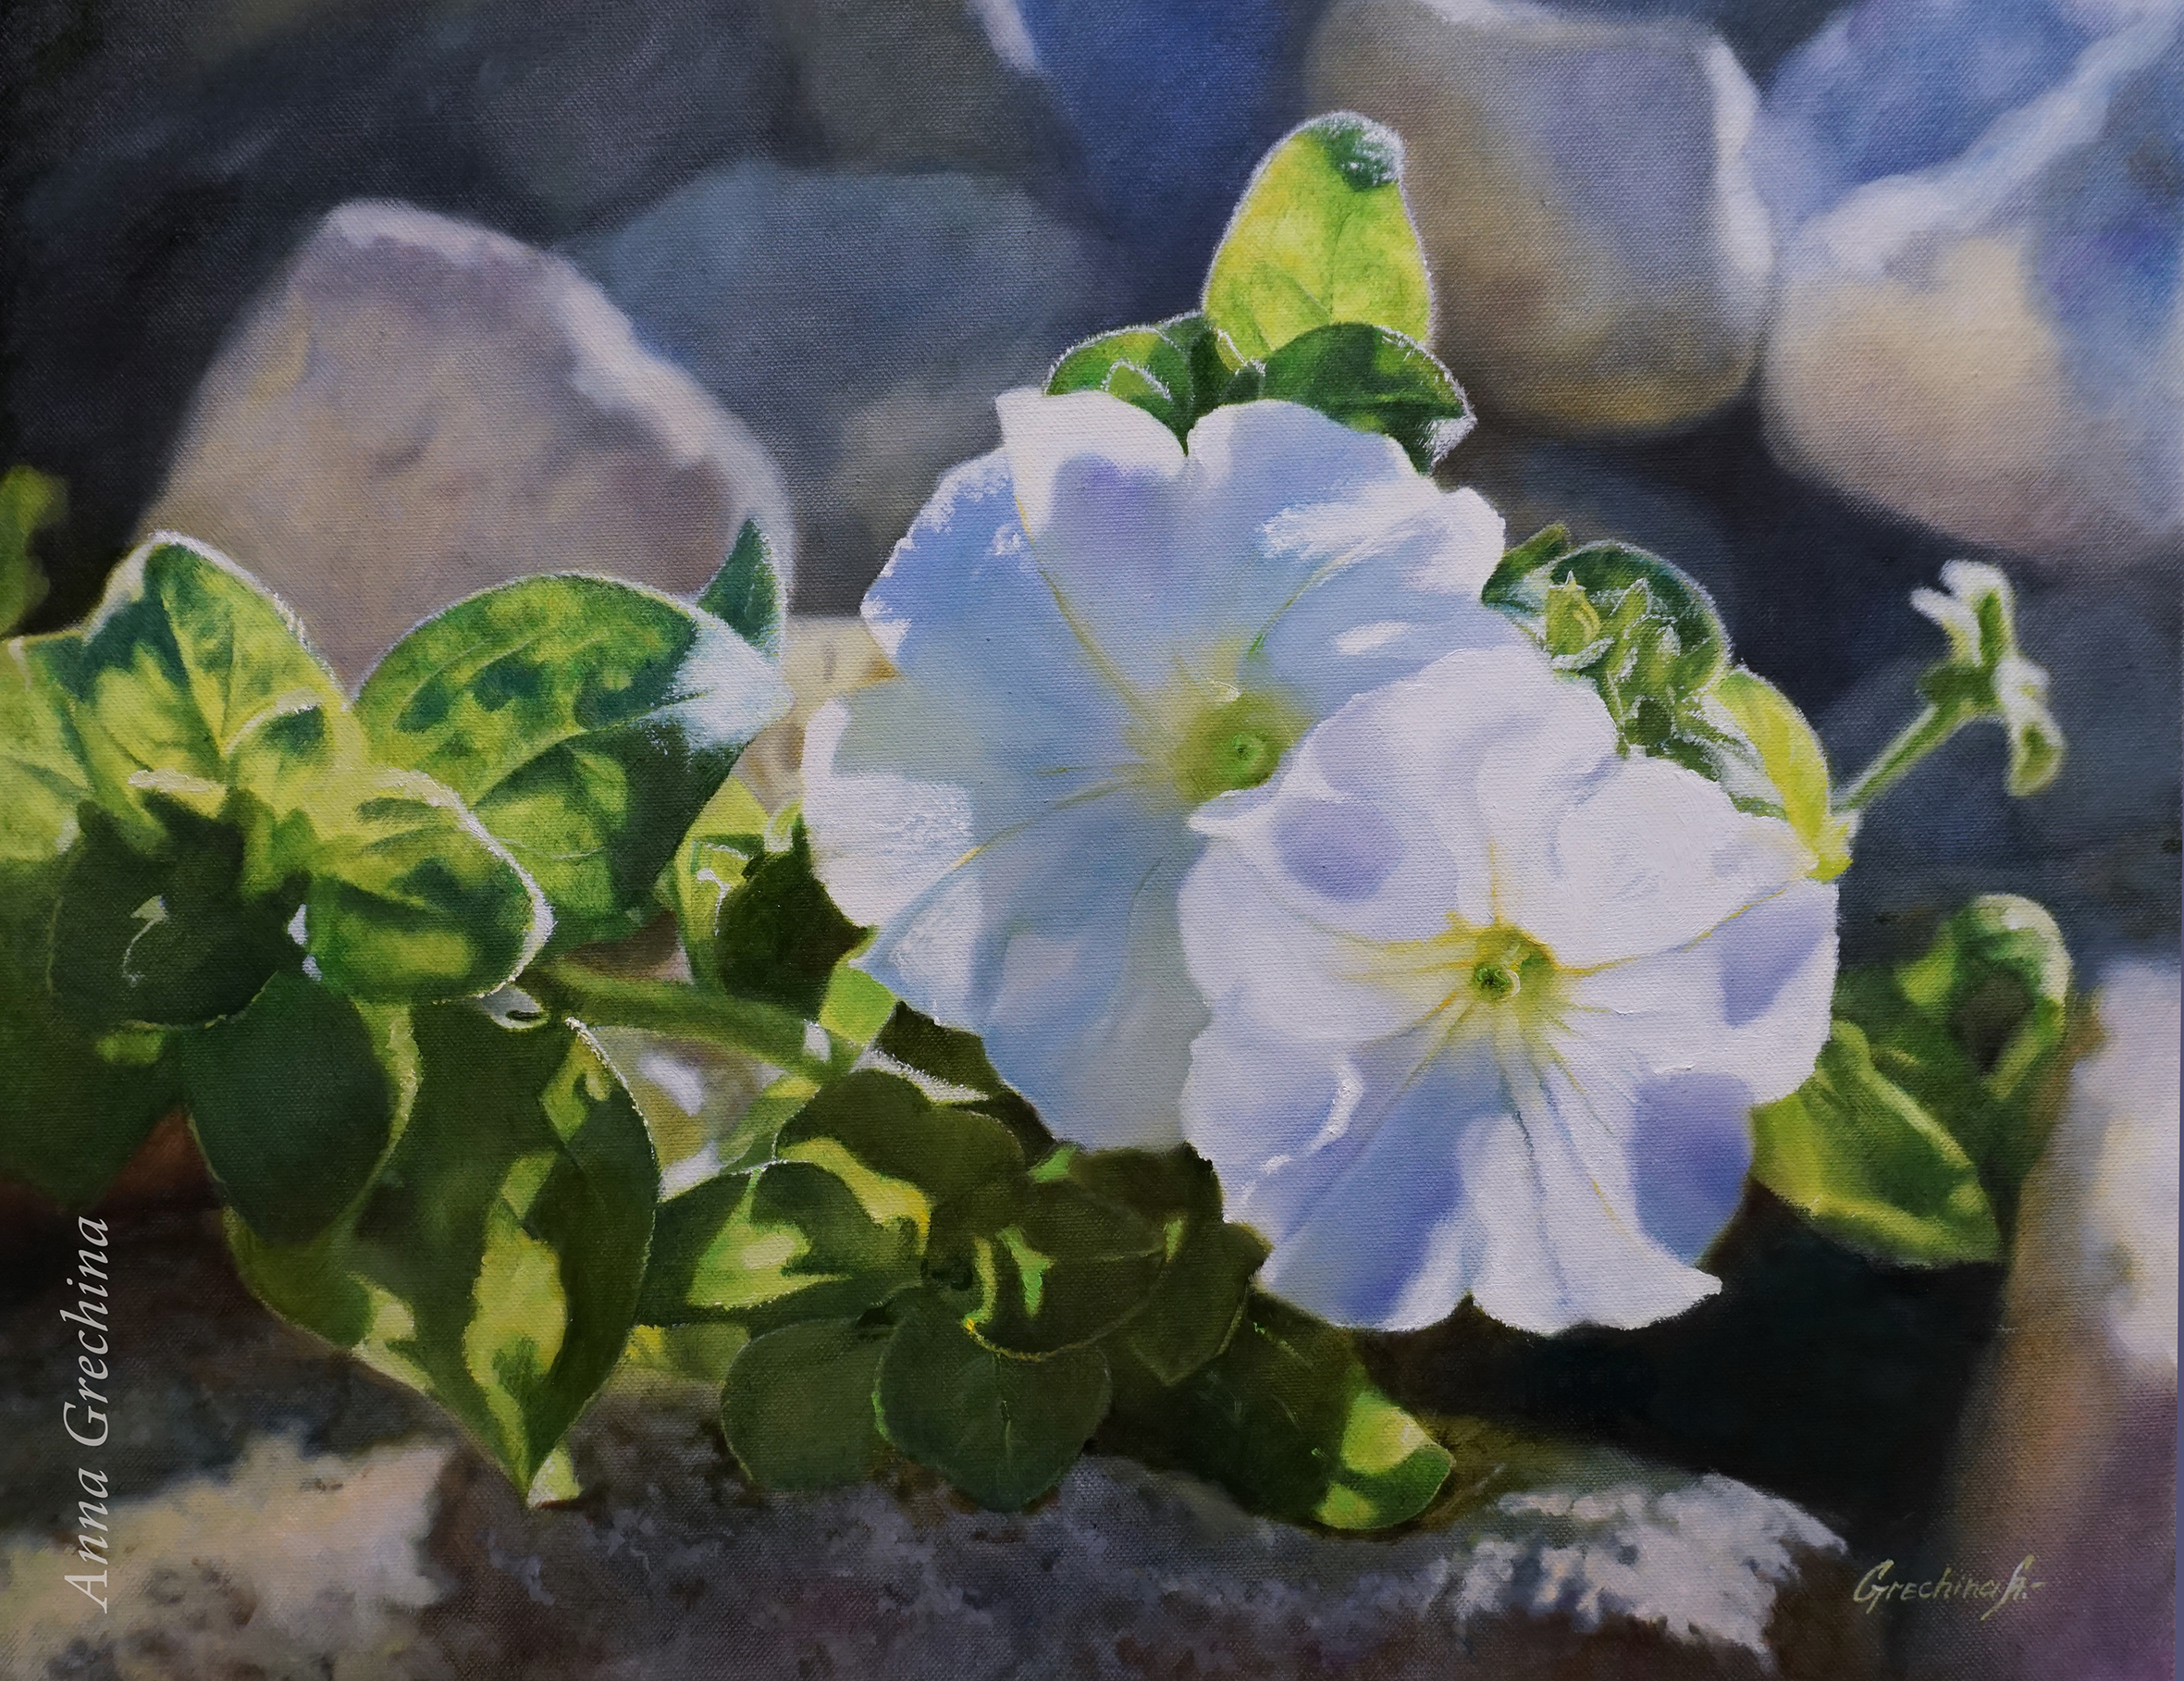 "White Petunias" Still life. Grechina Anna painting, flowers, photorealism.